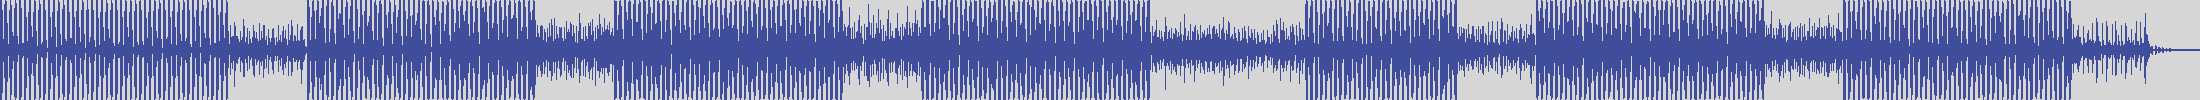 atomic_recordings [AR003] Jeff Roger - Alpha Centauri [Human Mix] audio wave form